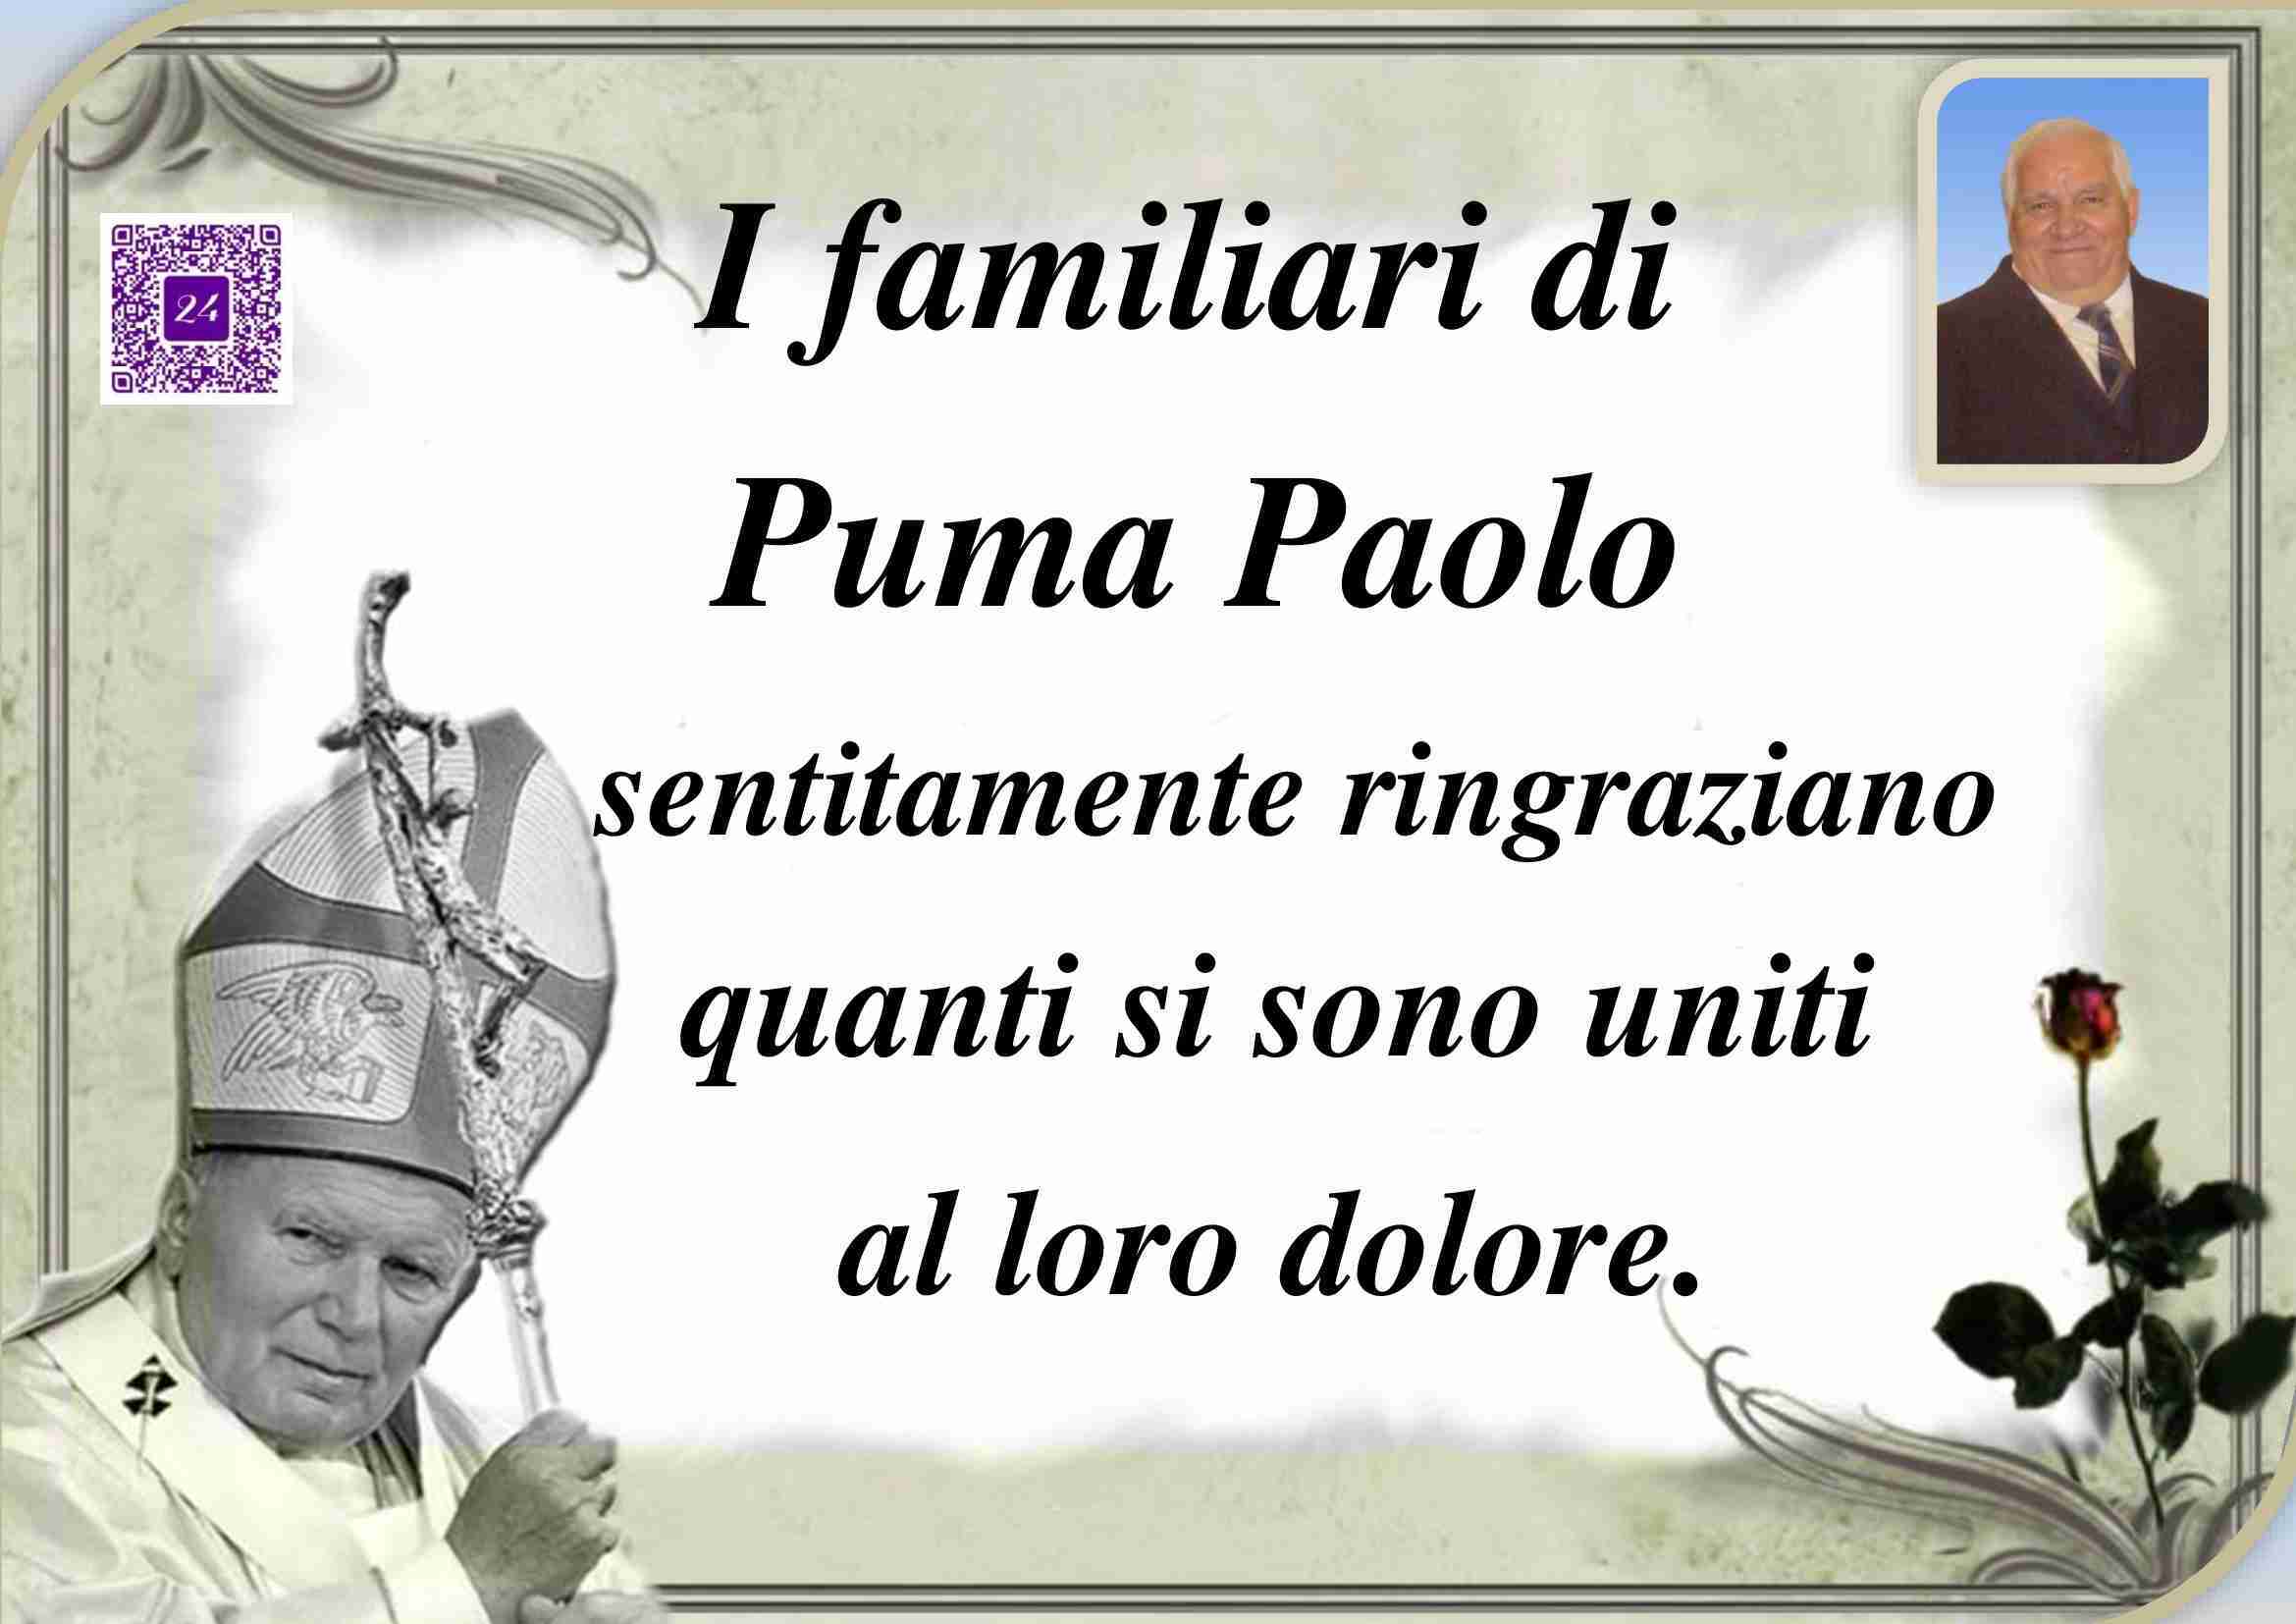 Paolo Puma